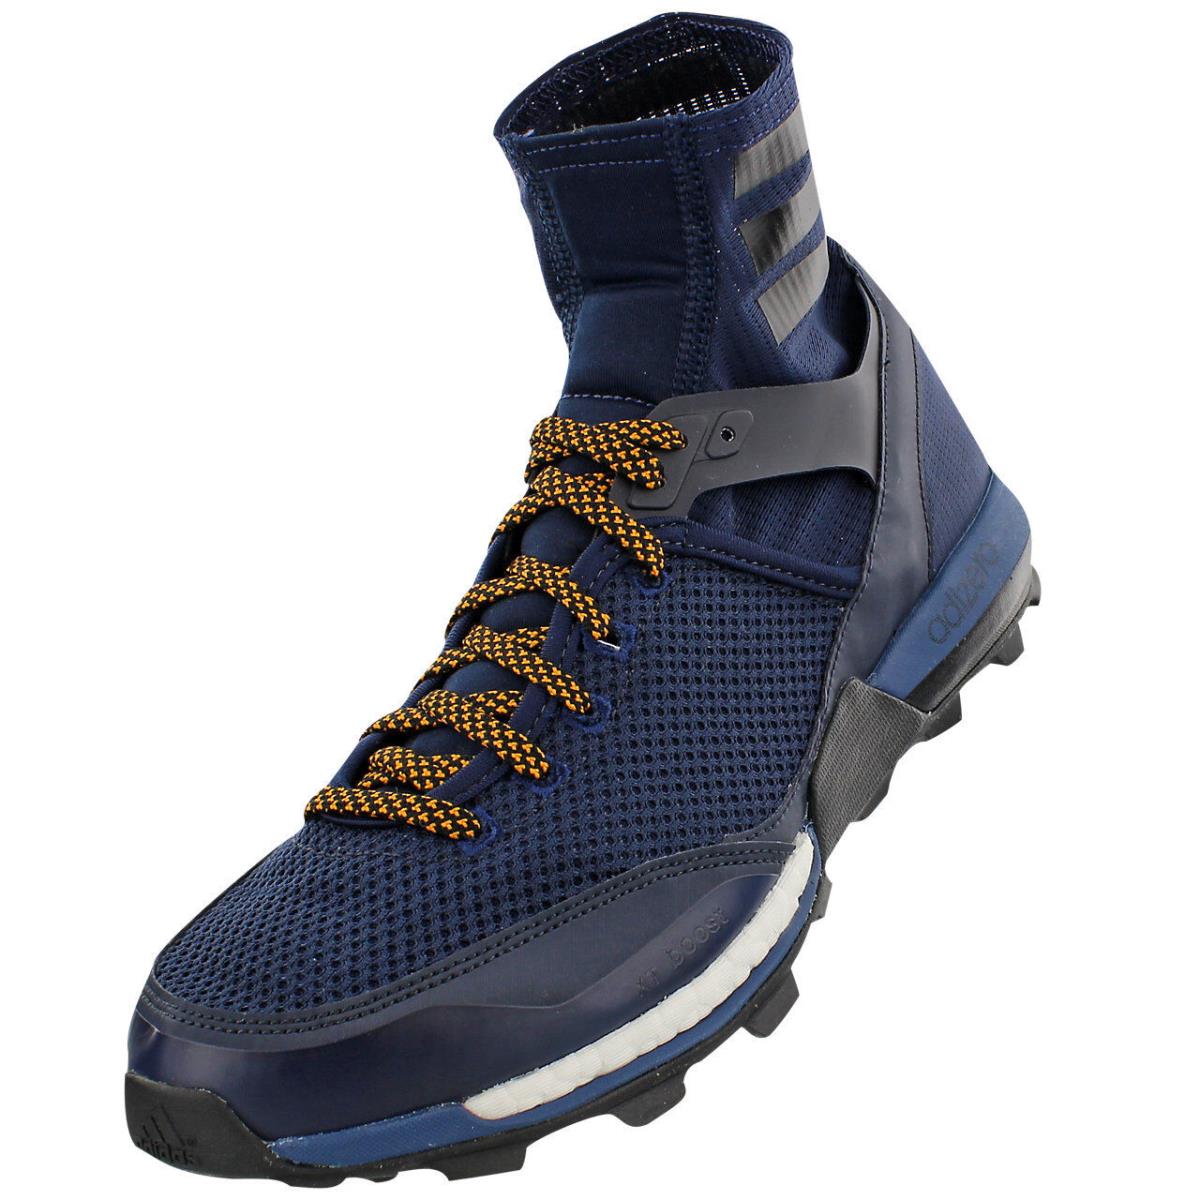 Adidas XT Boost Mens Trail Running/hiking Shoes Size 8.5 Euro 42 Retail - Blue